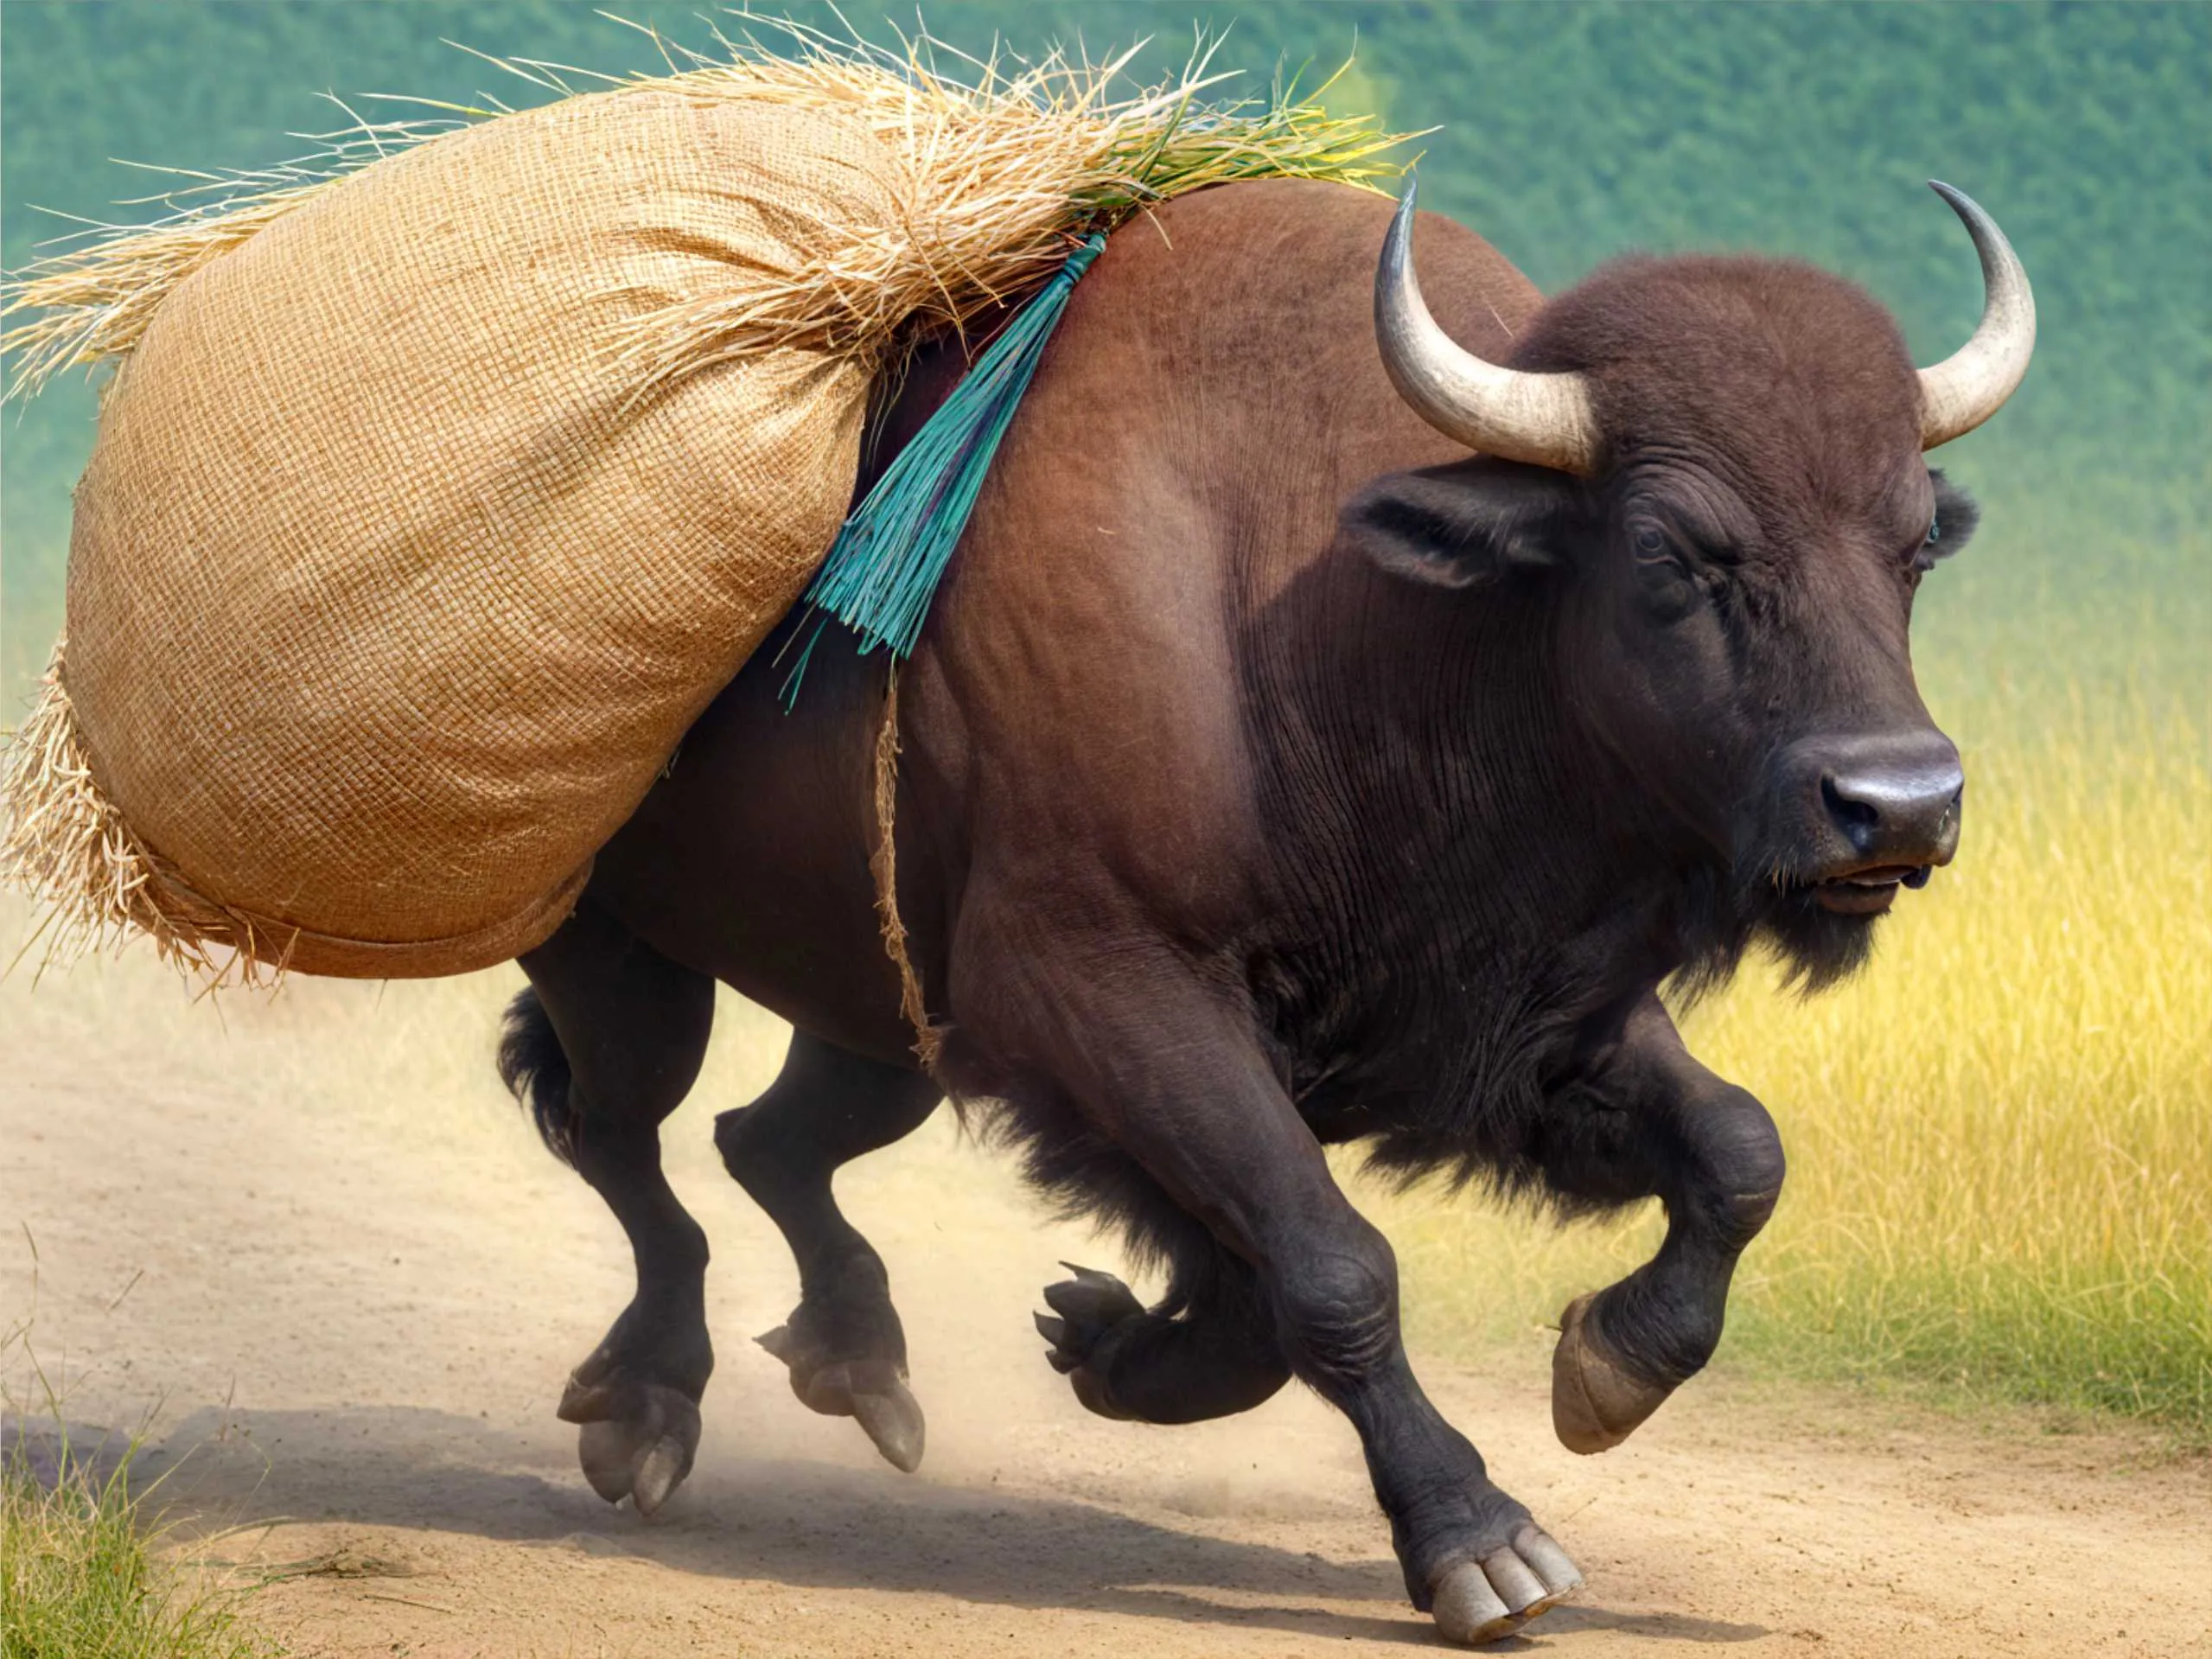 cartoon image of a buffalo running